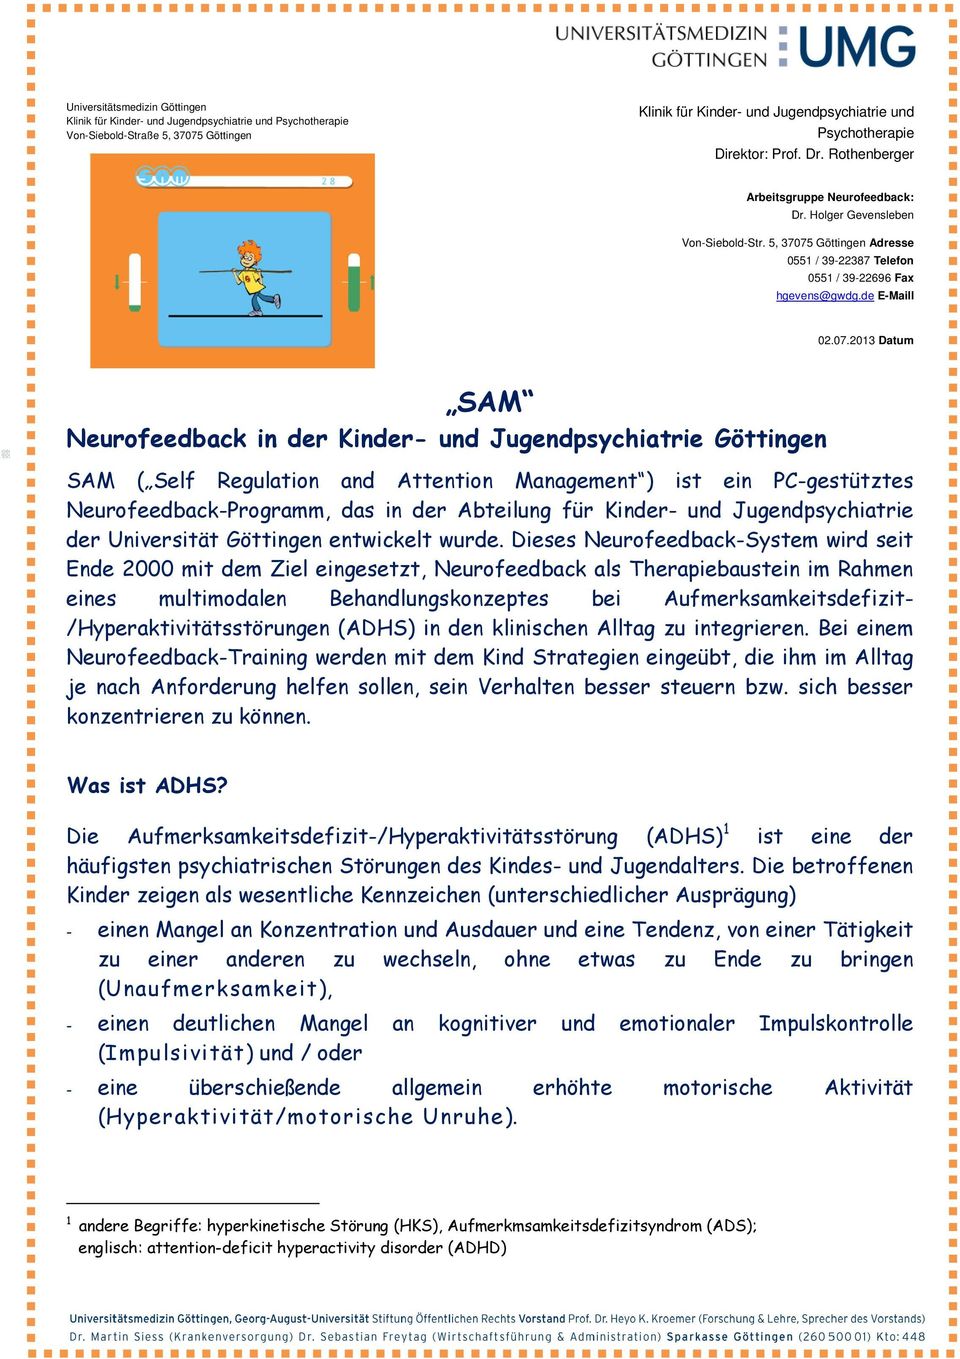 Göttingen Adresse 0551 / 39-22387 Telefon 0551 / 39-22696 Fax hgevens@gwdg.de E-Maill 02.07.